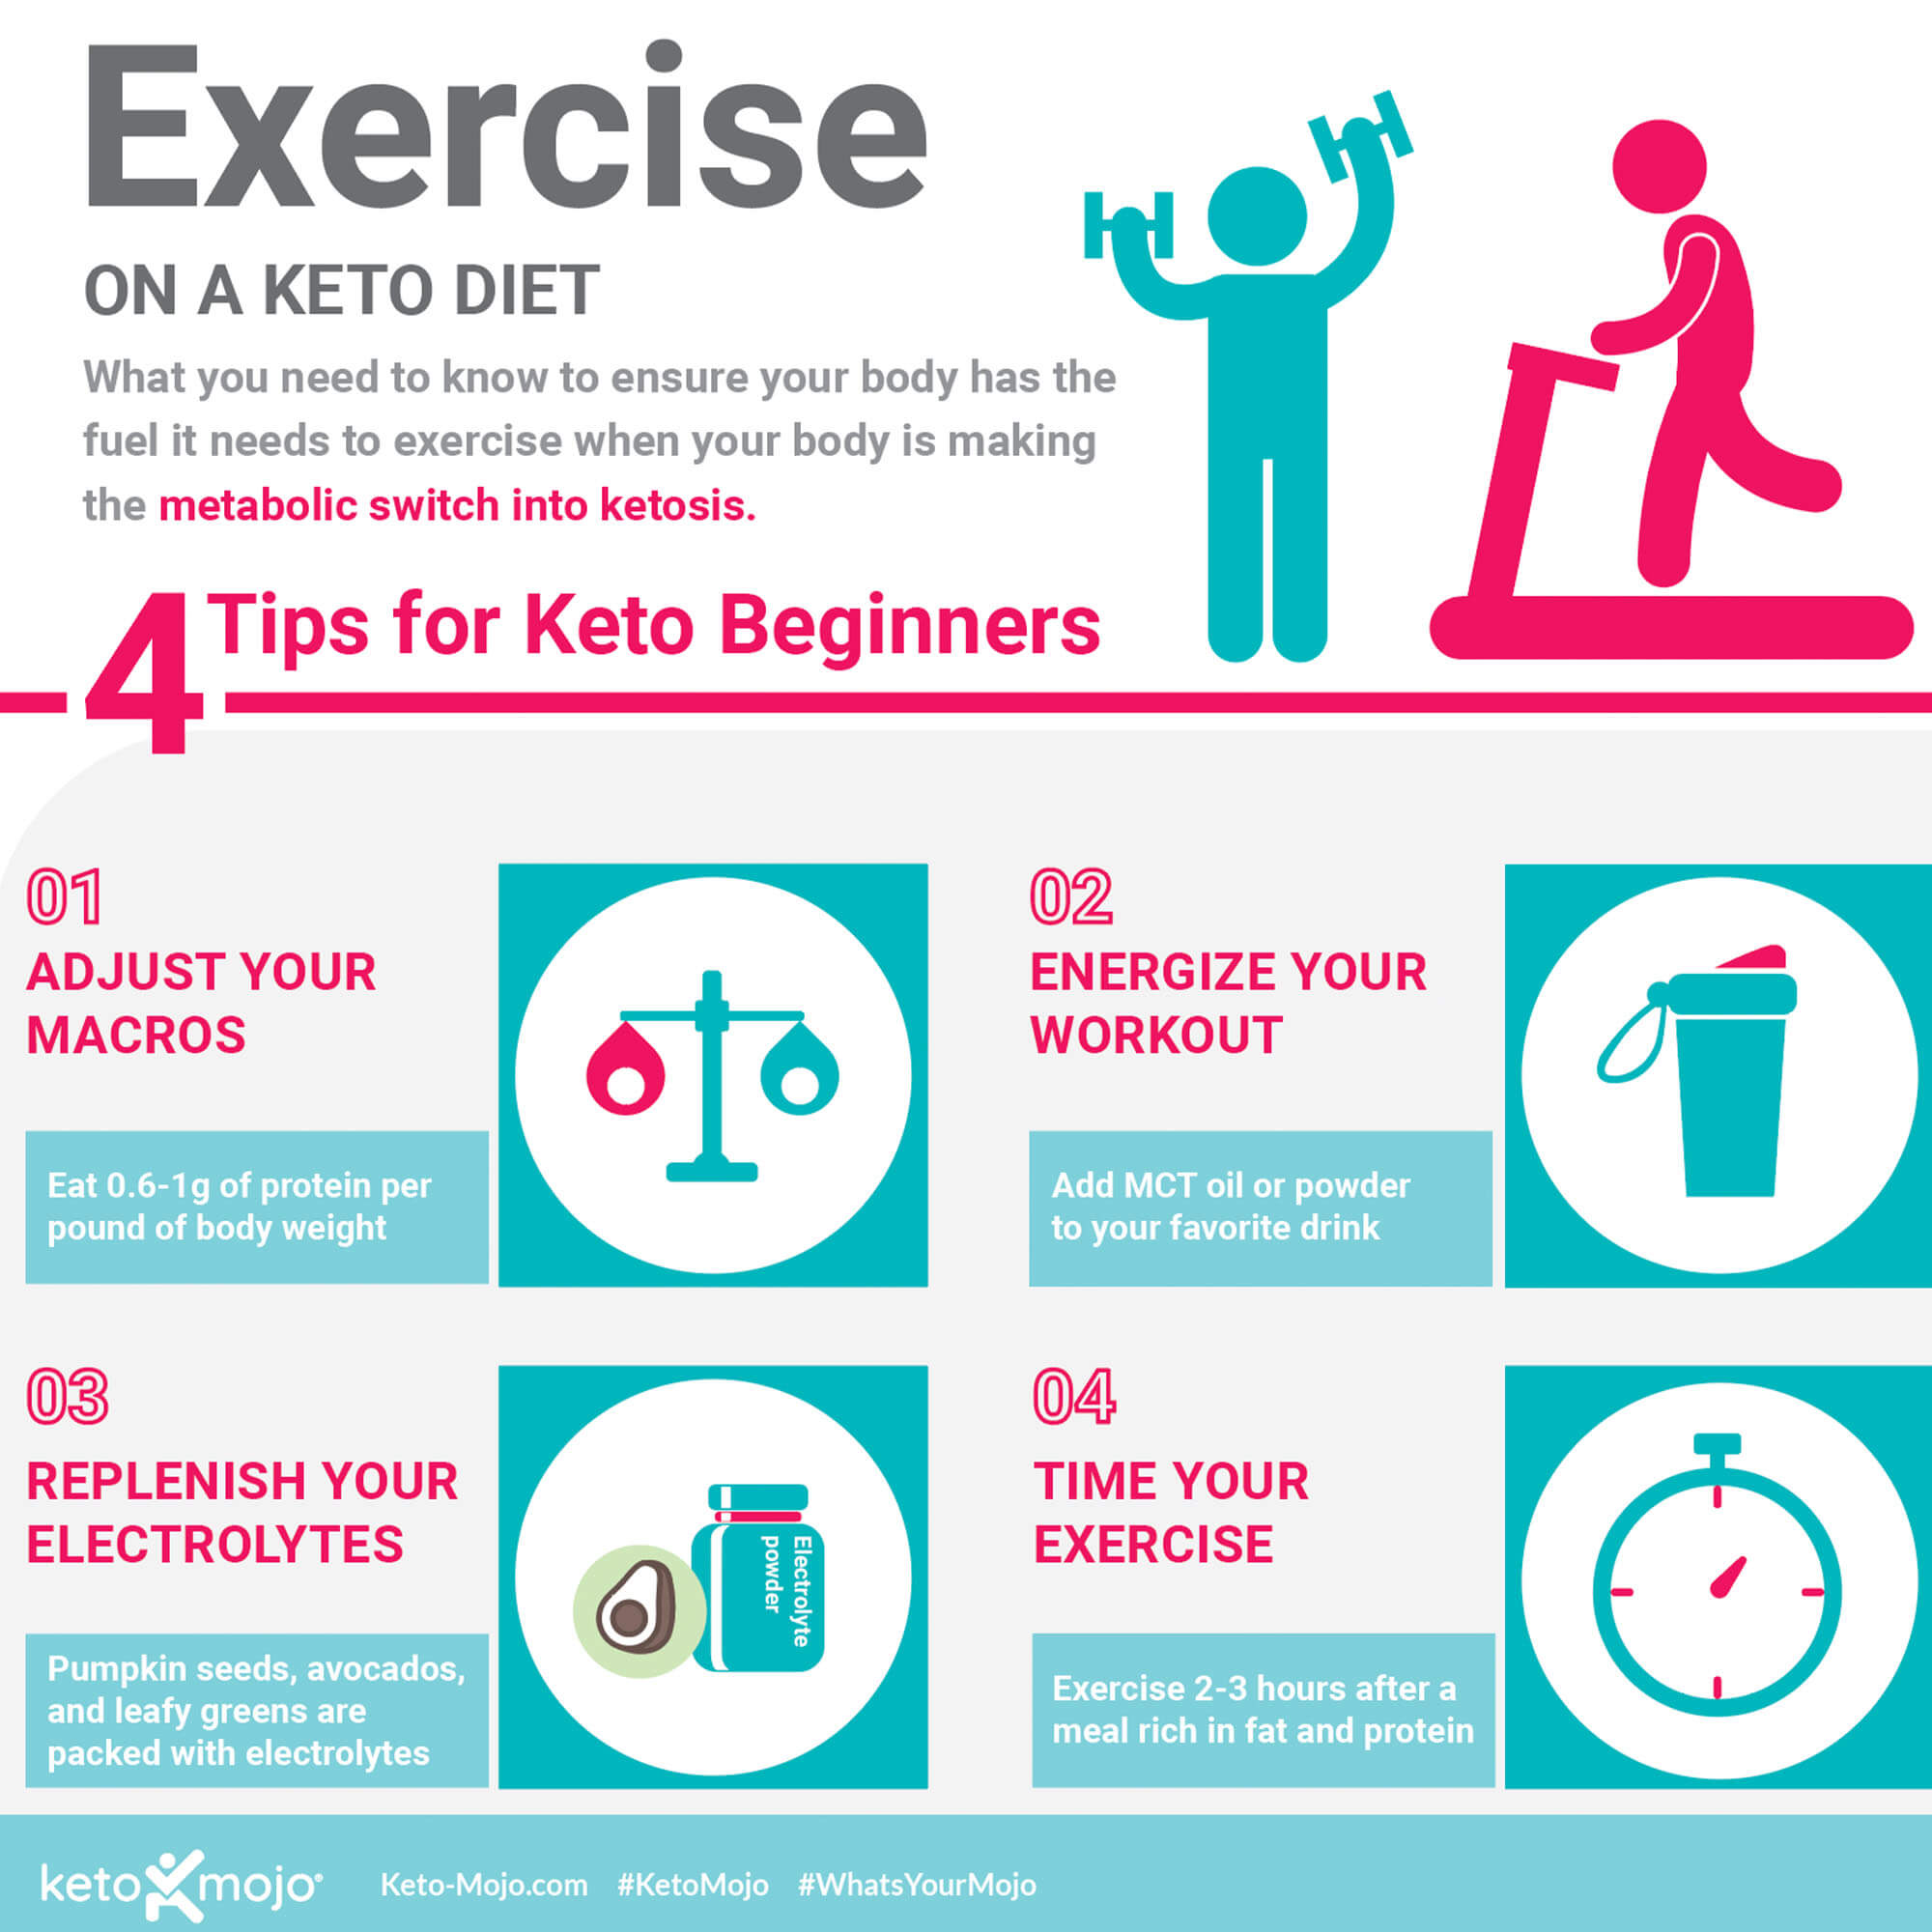 Keto-Mojo Exercise tips